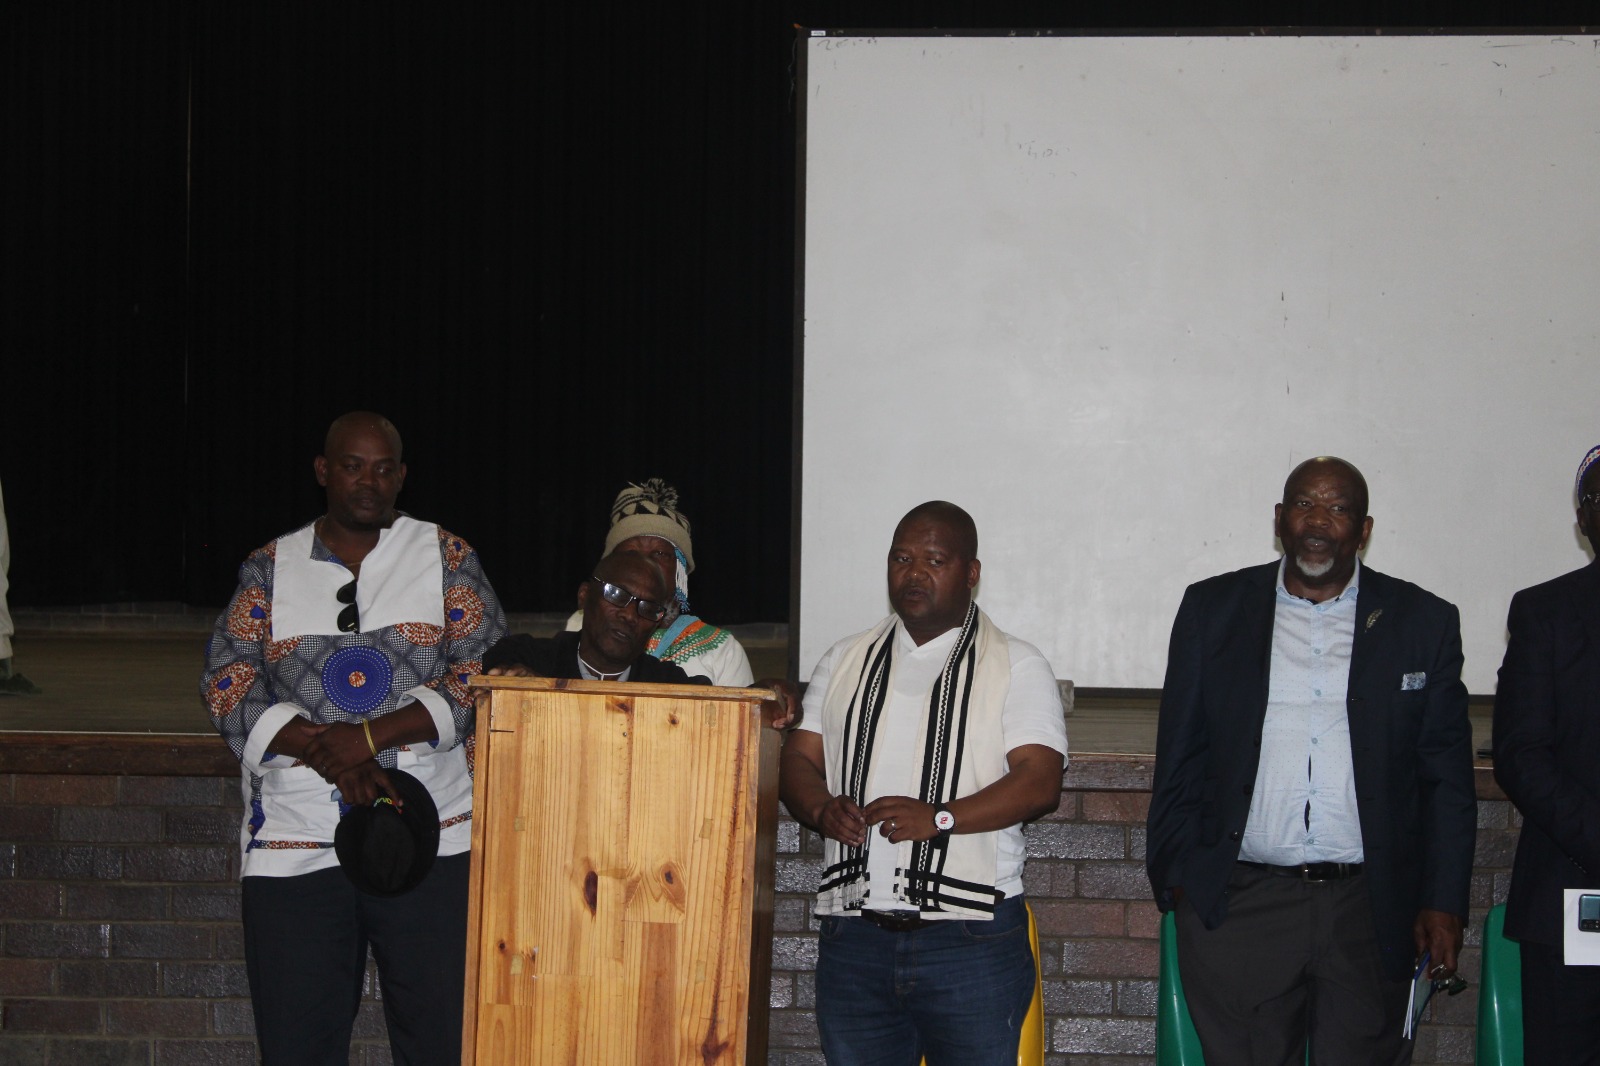 Lungile Ngxakaza speaking on behalf of Usiko loluntu organisation.